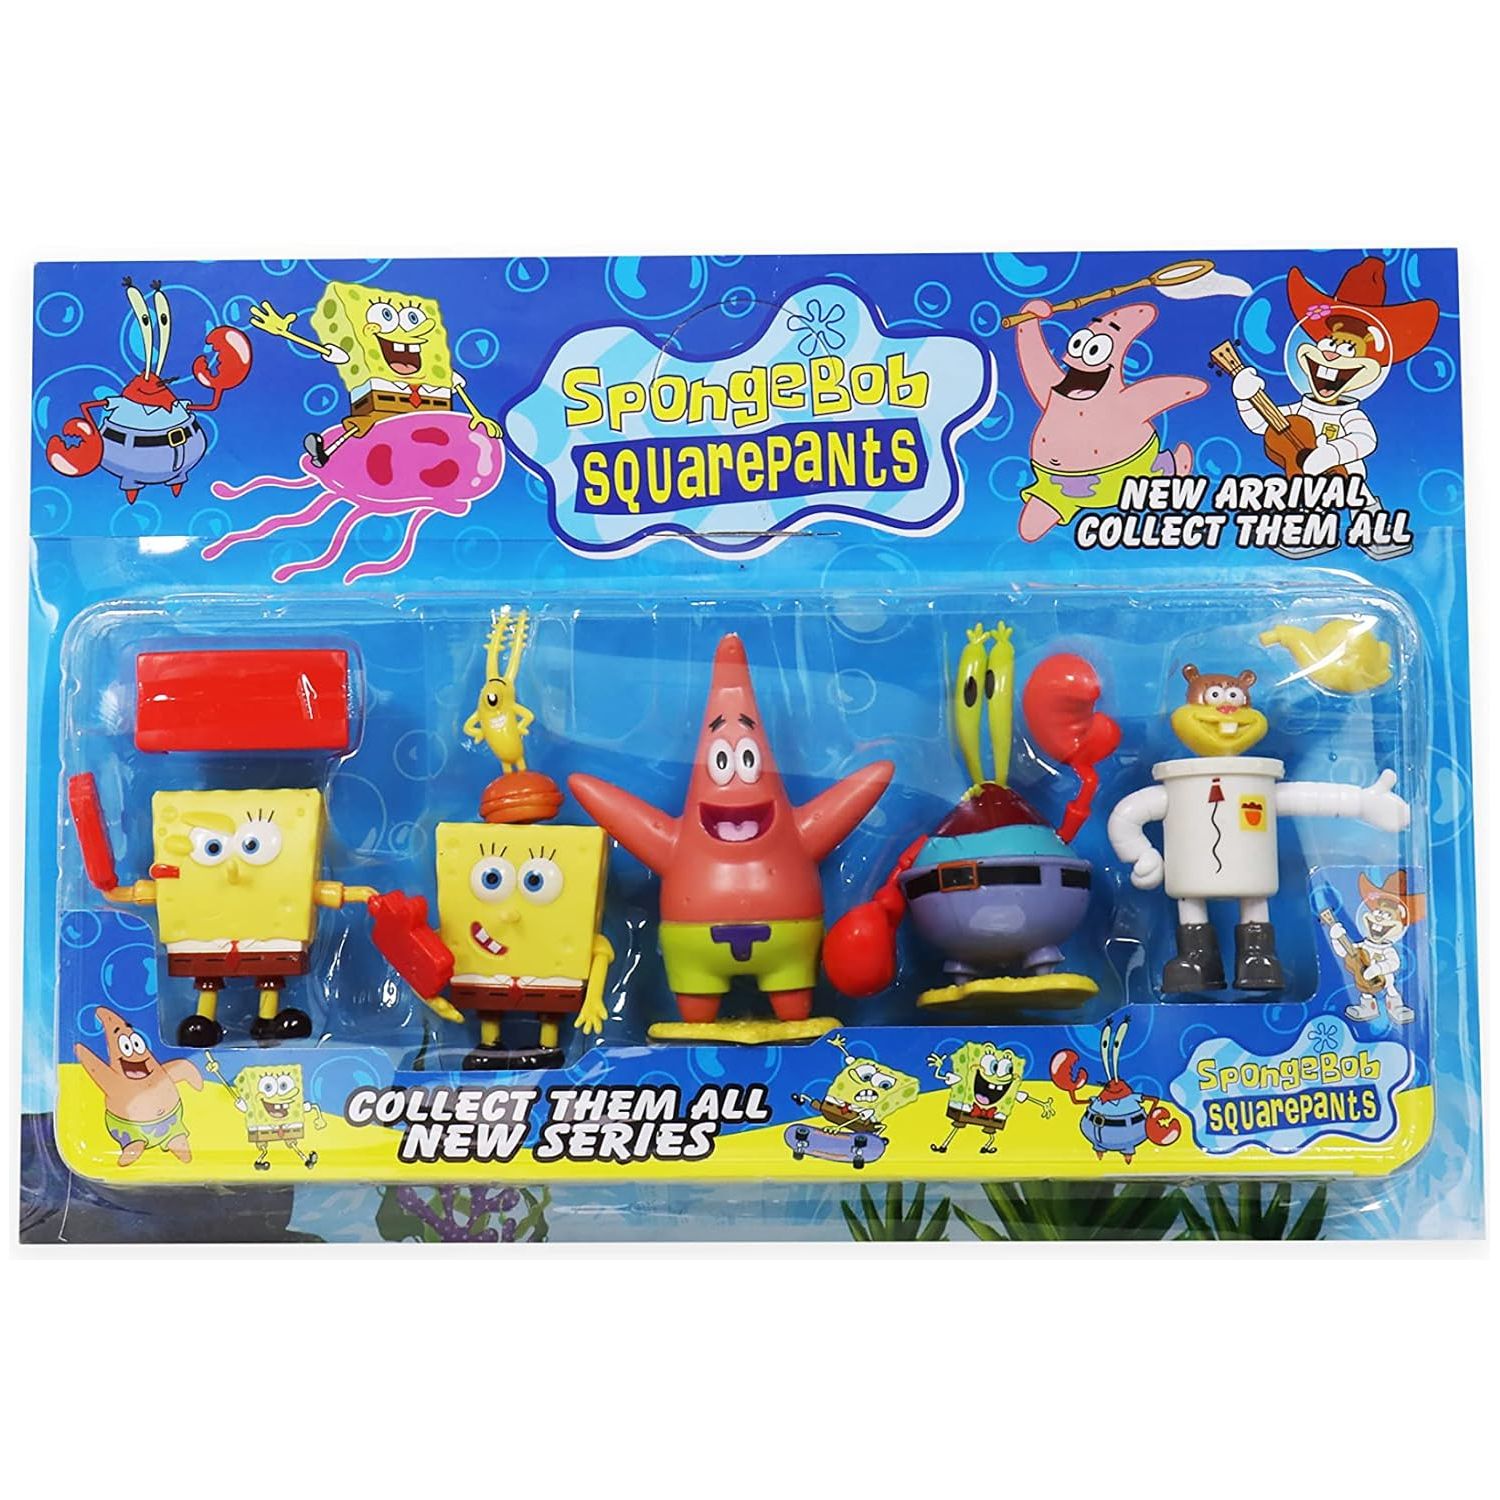 Spongebob squarepants collectable vinyl mini figures set 5 Figures 88092